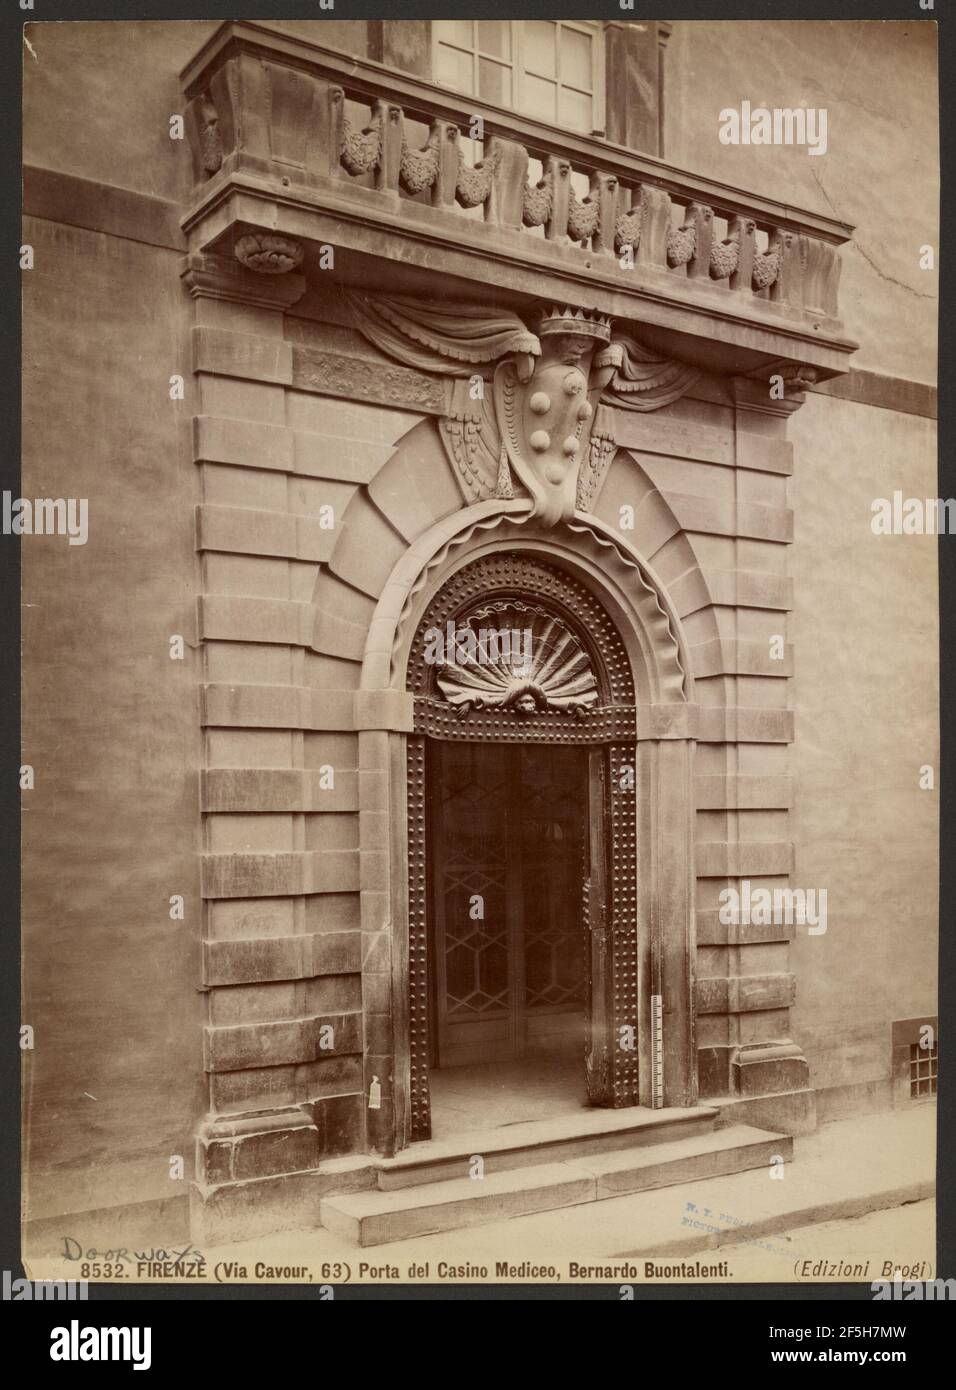 Firenze (Via Cavour, 63) - Porta del Casino Mediceo, Bernardo Buontalenti. Carlo Brogi (Italian, 1850 - 1925) Stock Photo